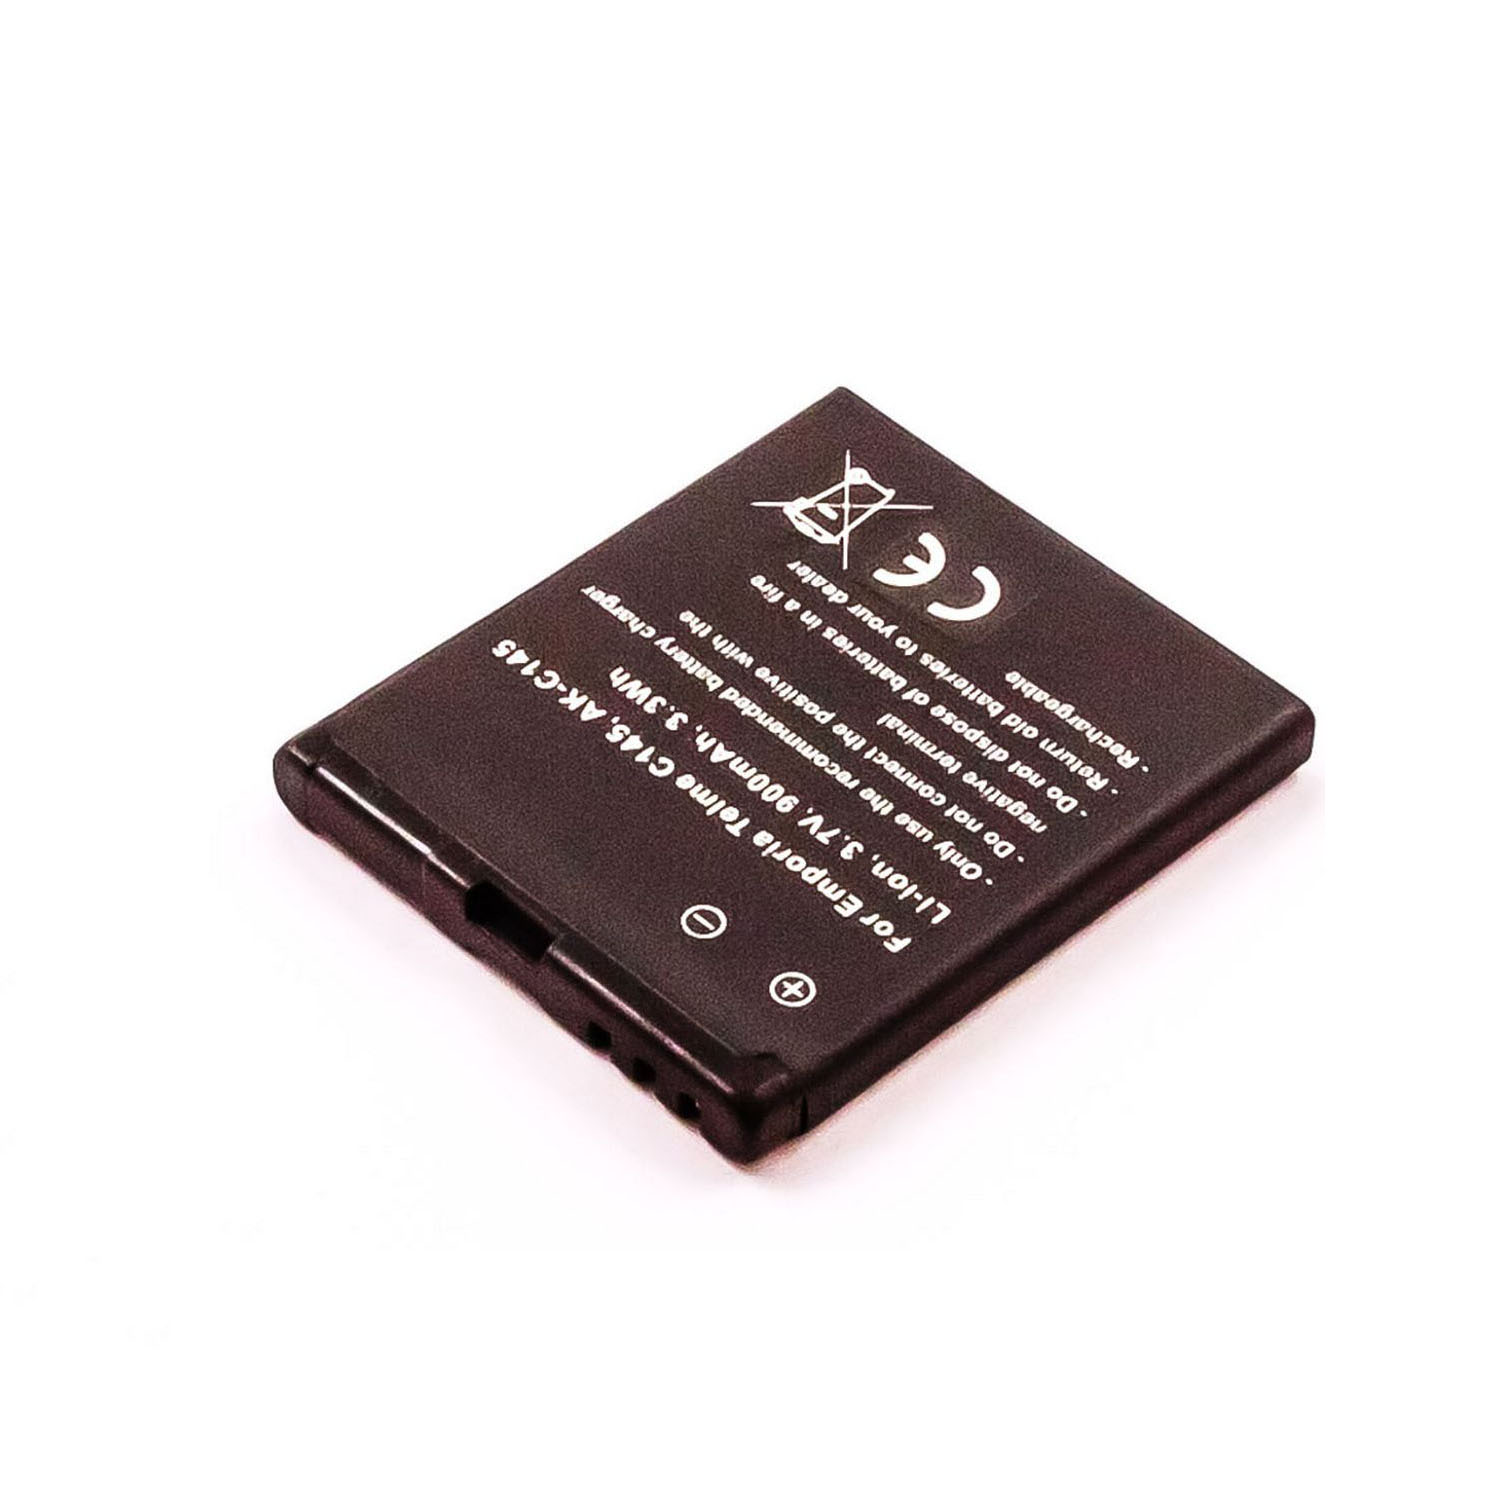 AGI Akku Li-Ion mit 700 3.7 Li-Ion, Handy-/Smartphoneakku, kompatibel C145|AK-C145 mAh Volt, Telme